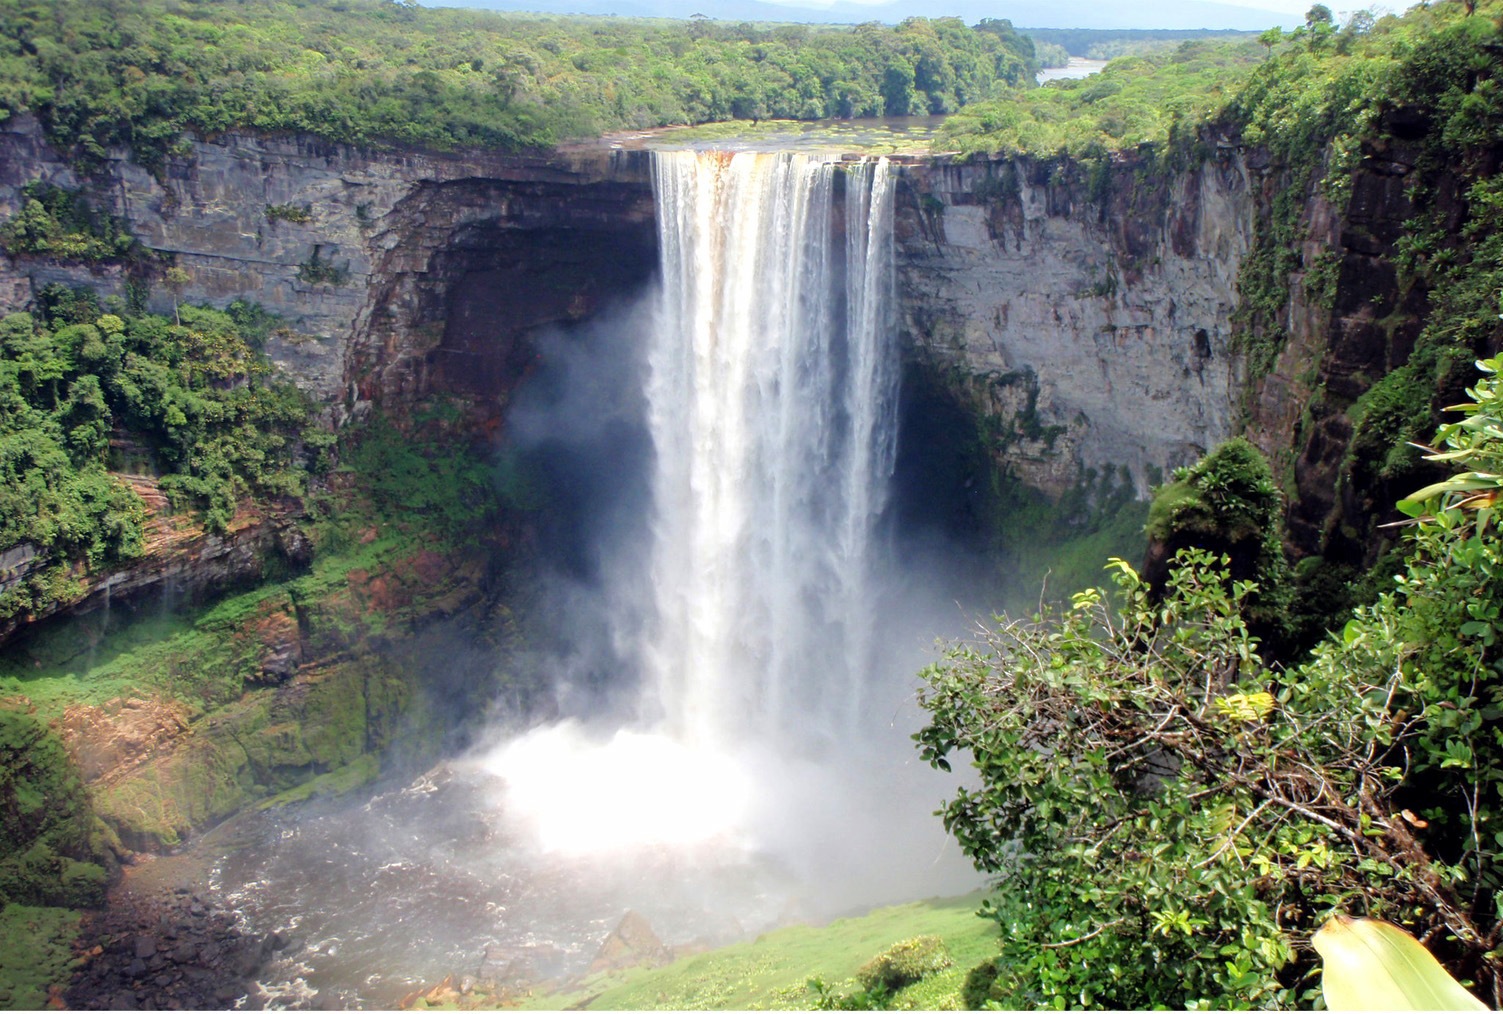 Водопад на гвианском плоскогорье. Кайетур, Гайана. Национальный парк Кайетур Гайана. Водопад Кайетур. Гвианское плоскогорье водопад Анхель.